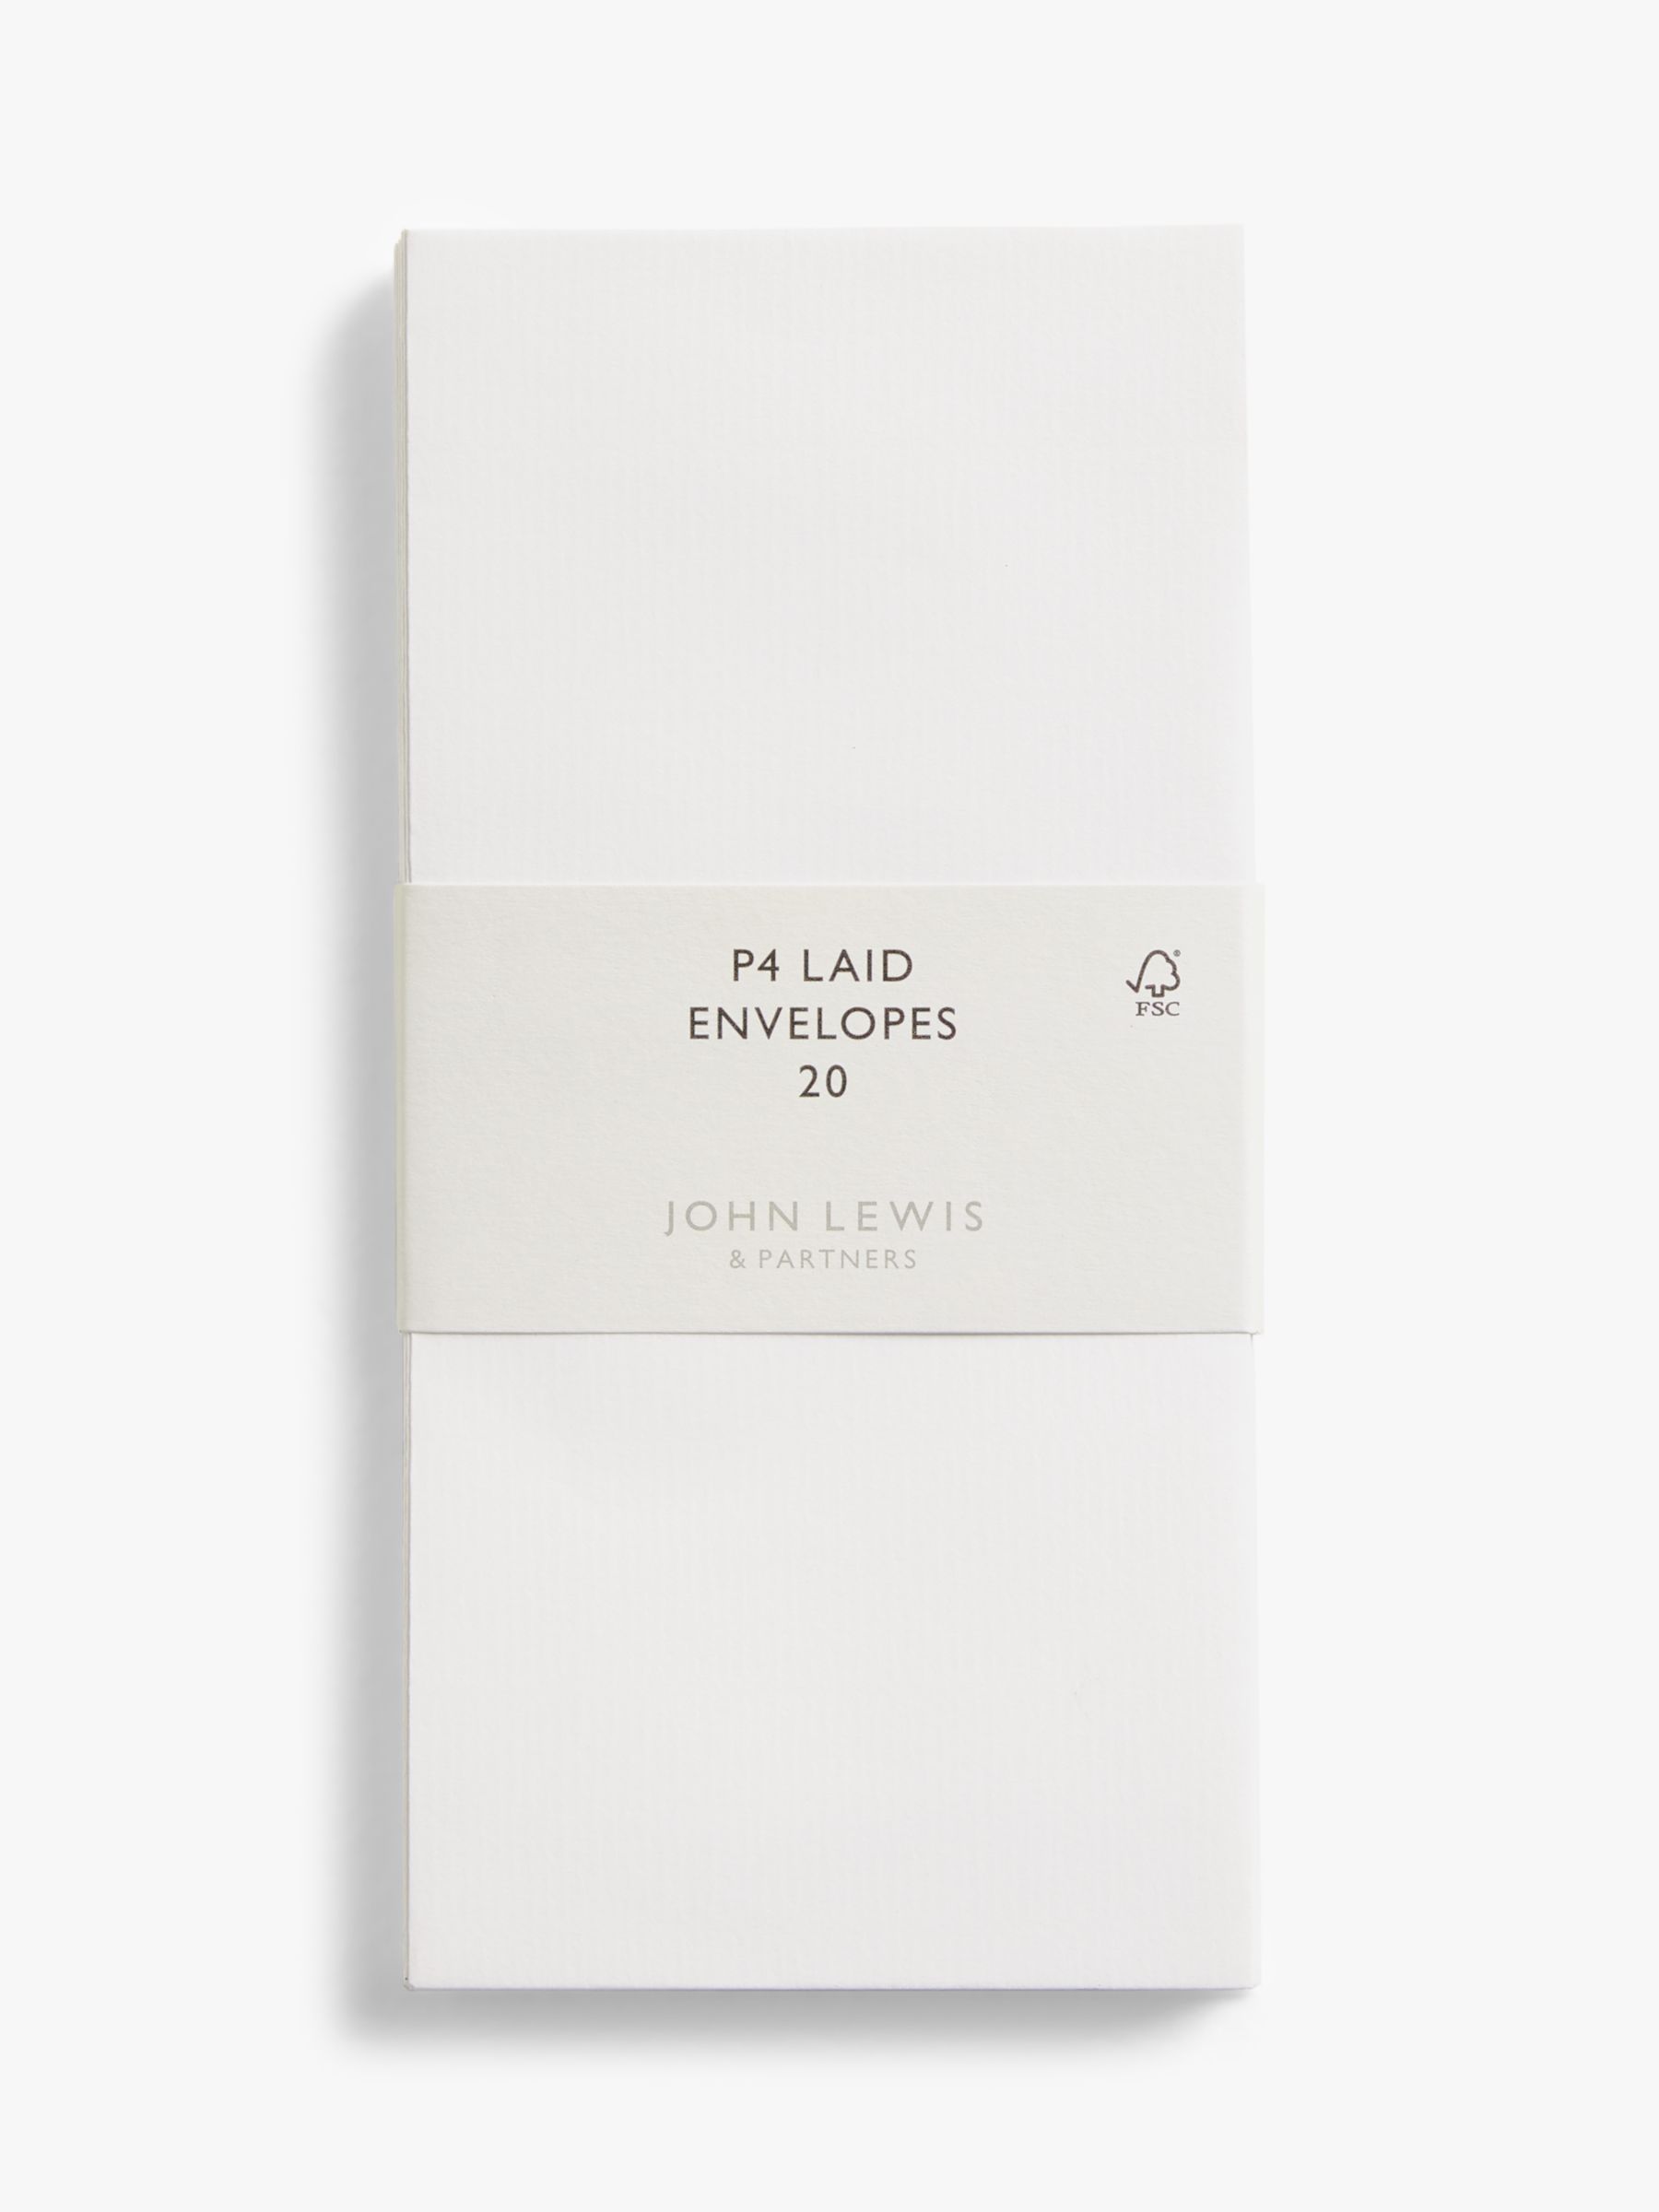 John Lewis P4 Laid Envelopes, Pack of 20